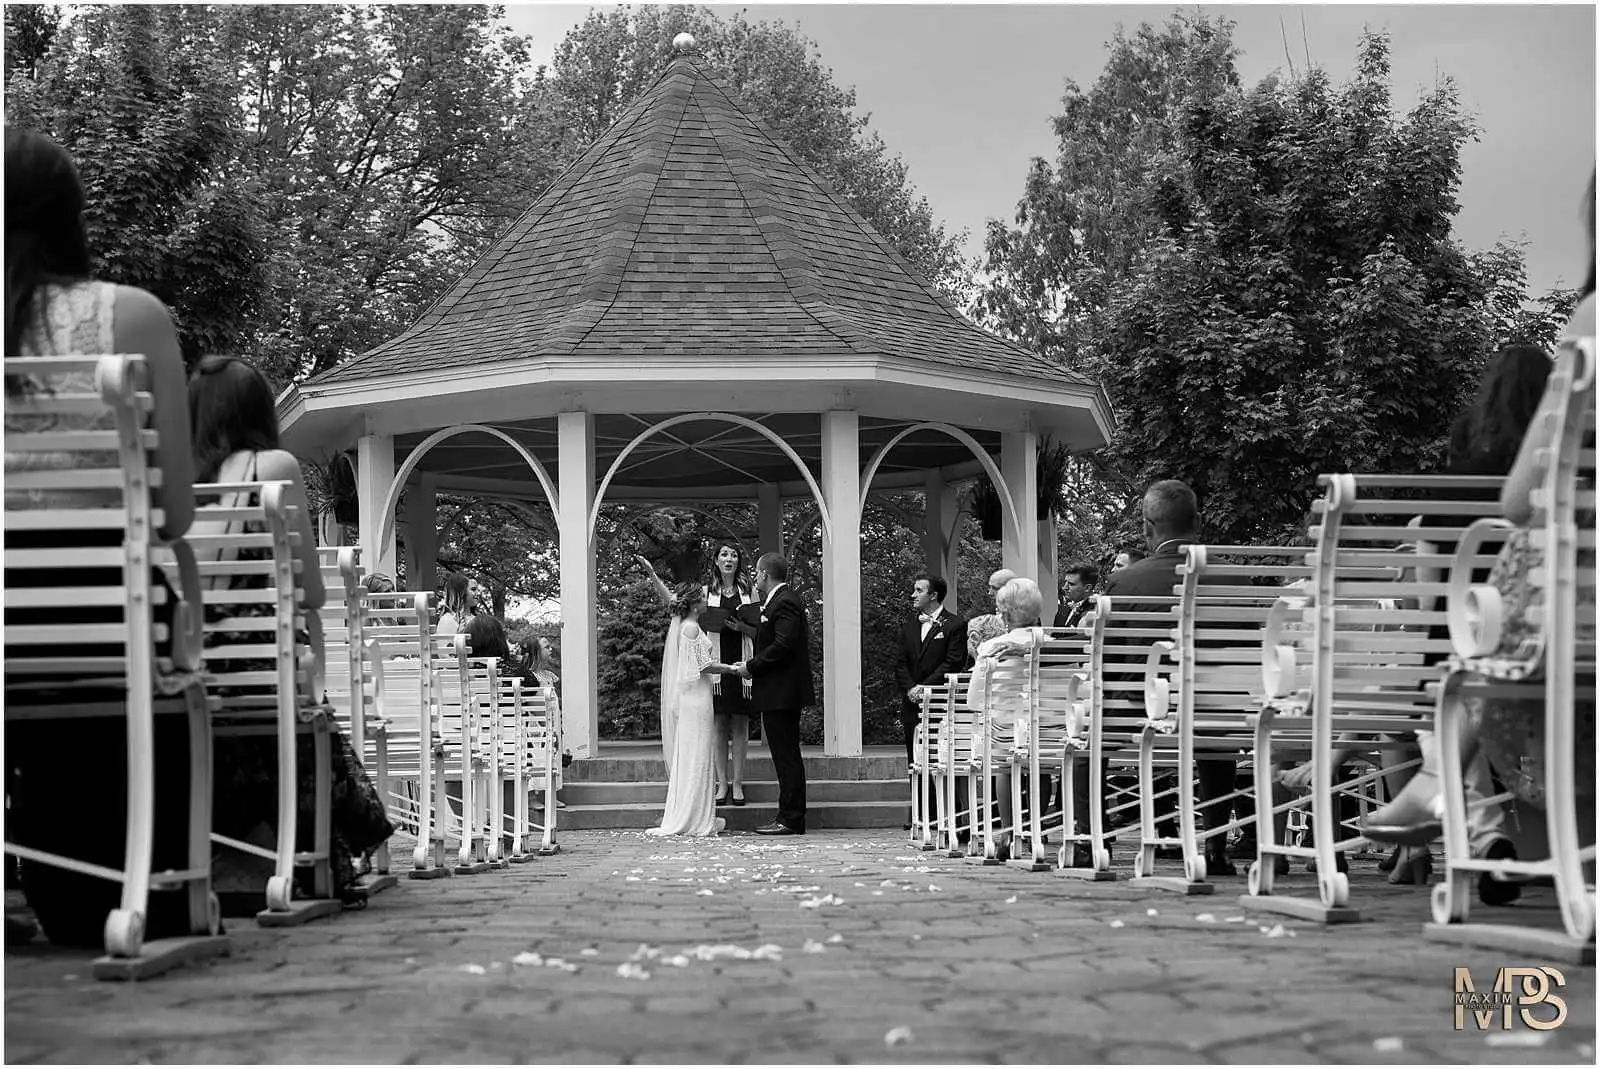 Dayton Wedding ceremony at Polen Farm in Kettering Ohio